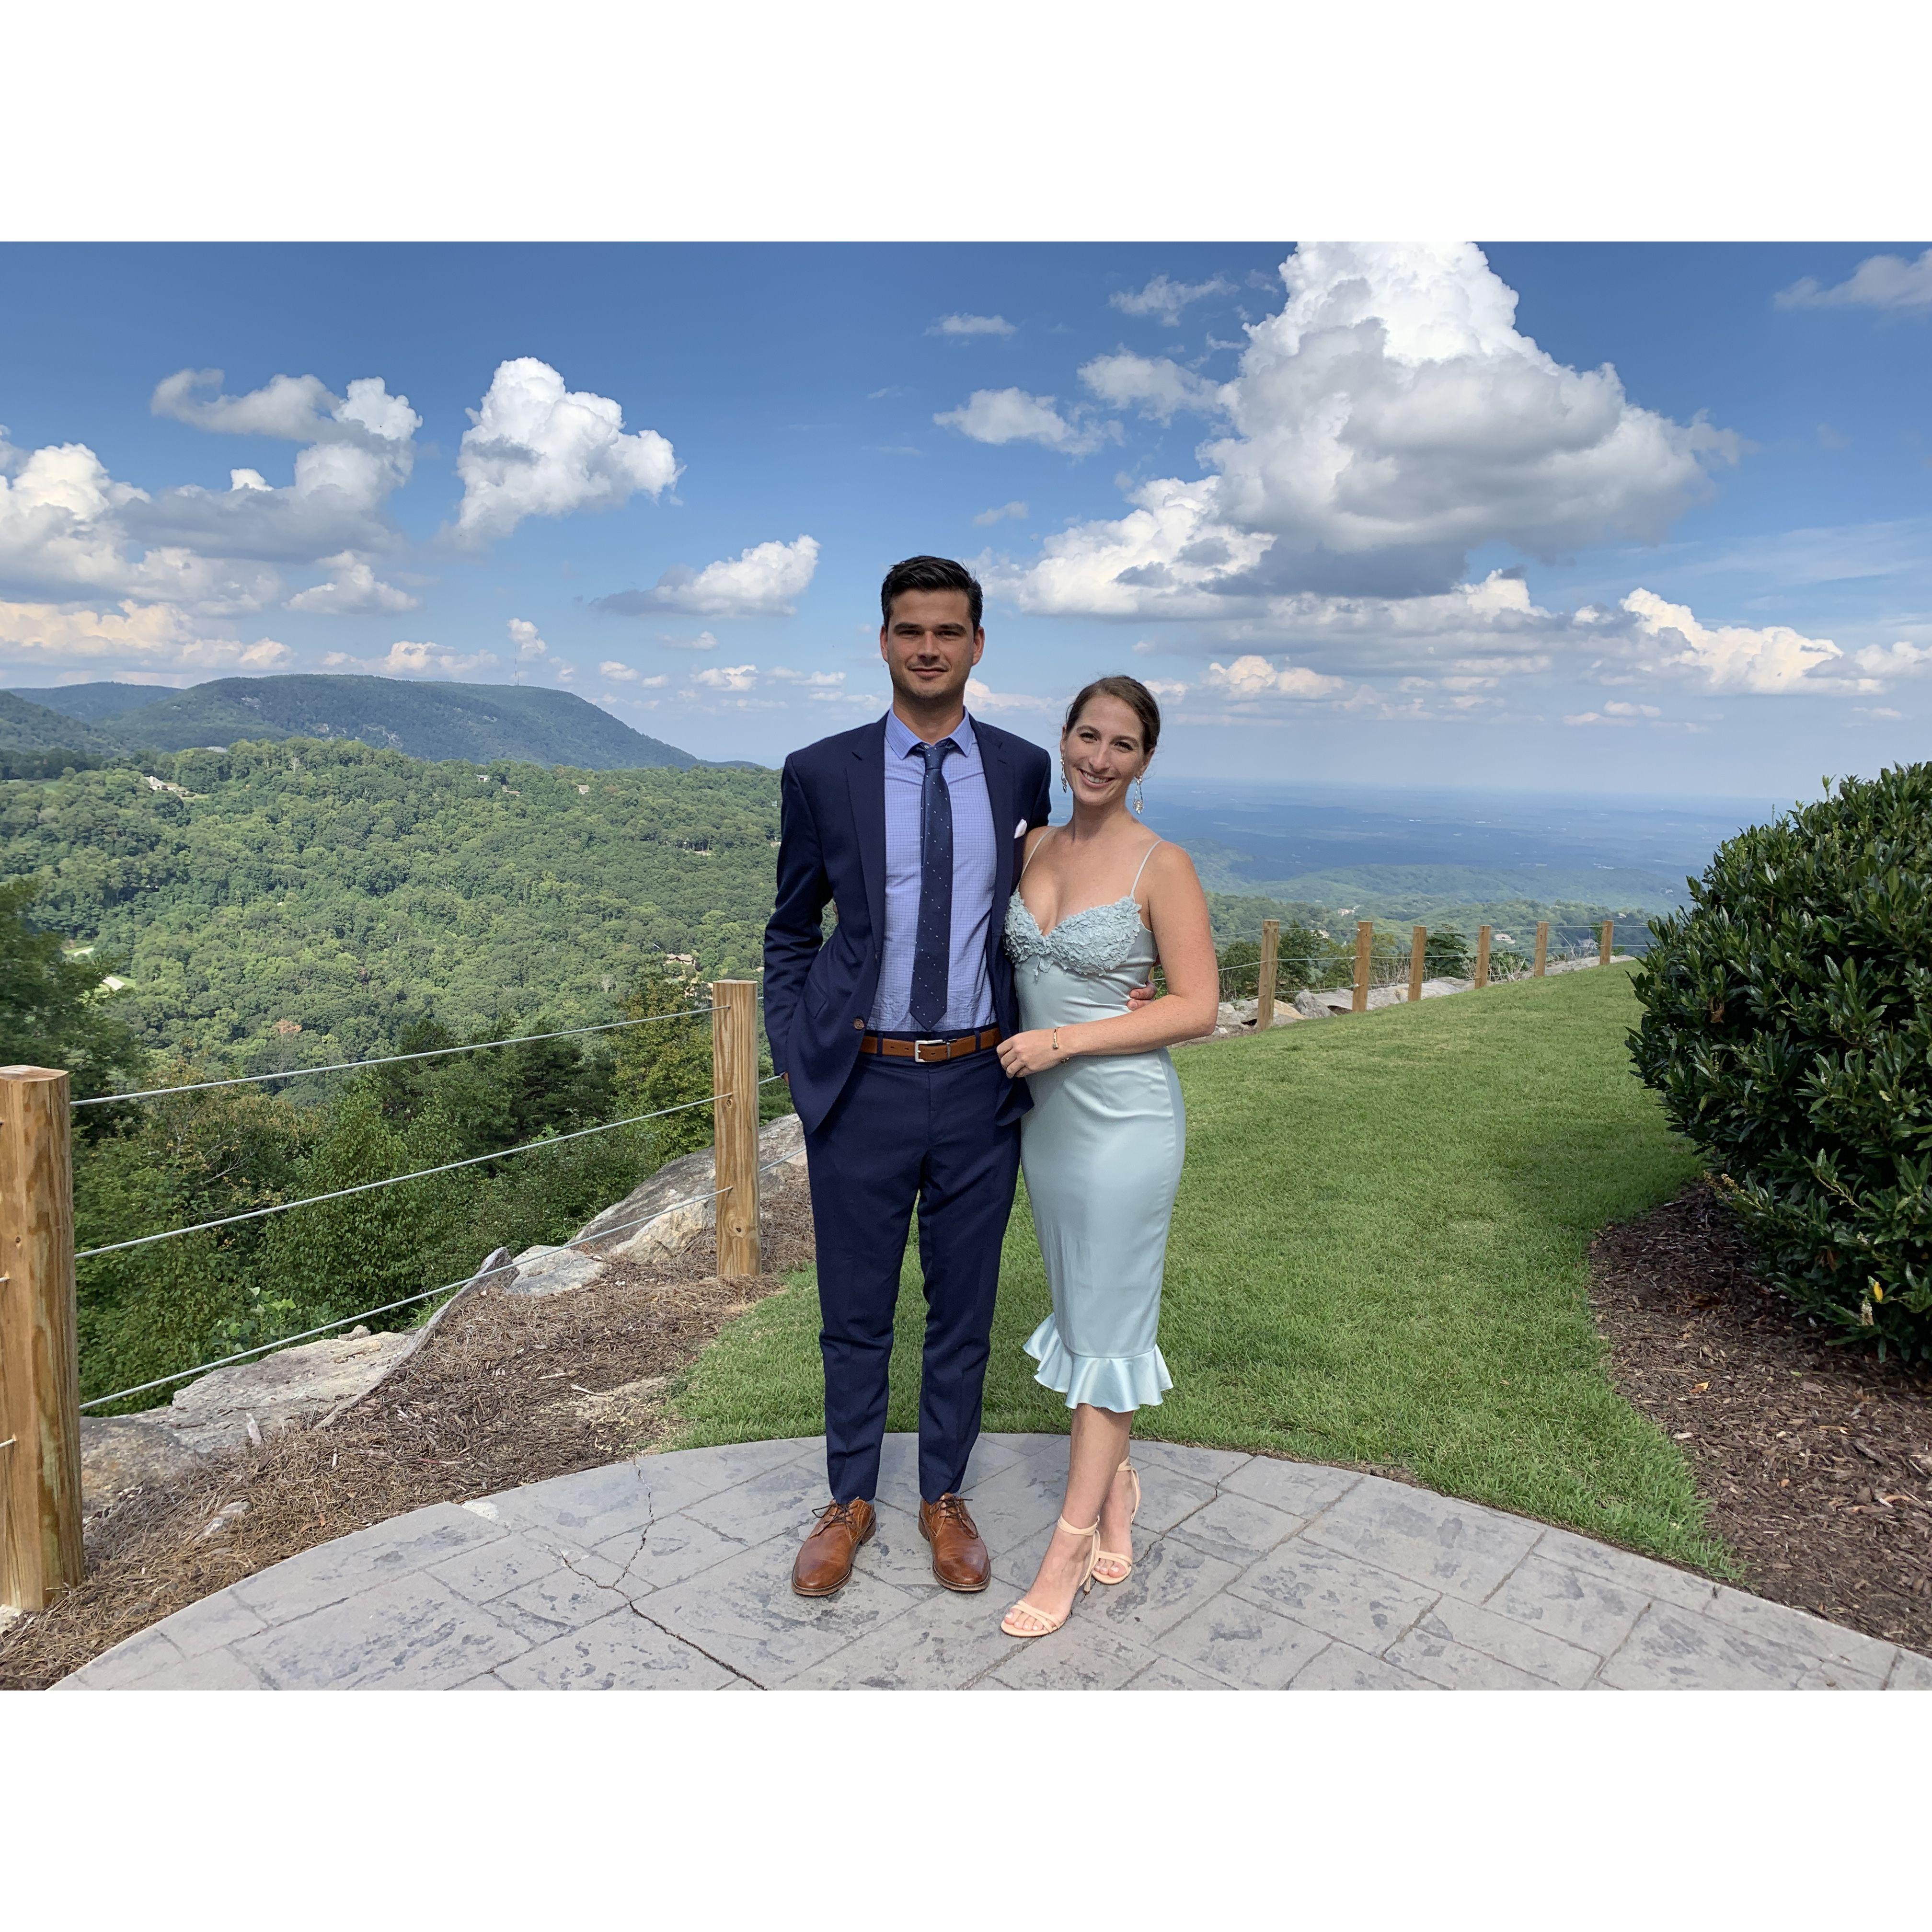 First wedding as a couple - September 2019